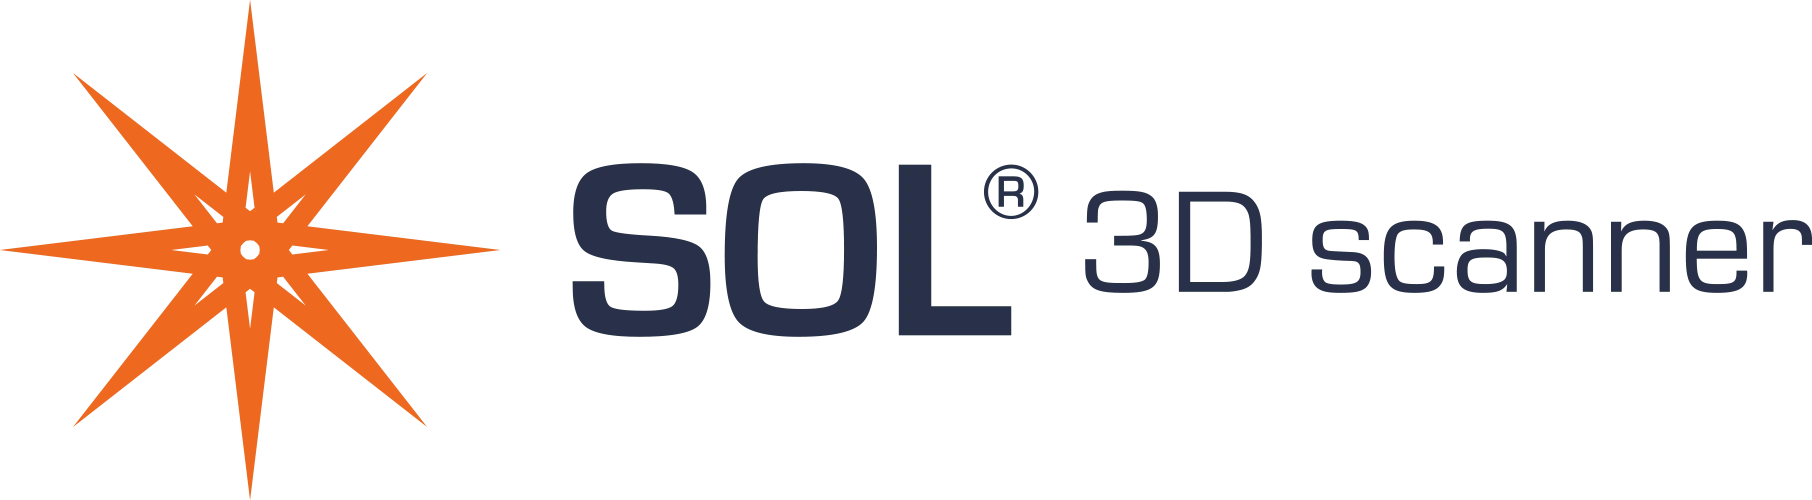 SOL 3D scanner software for download here